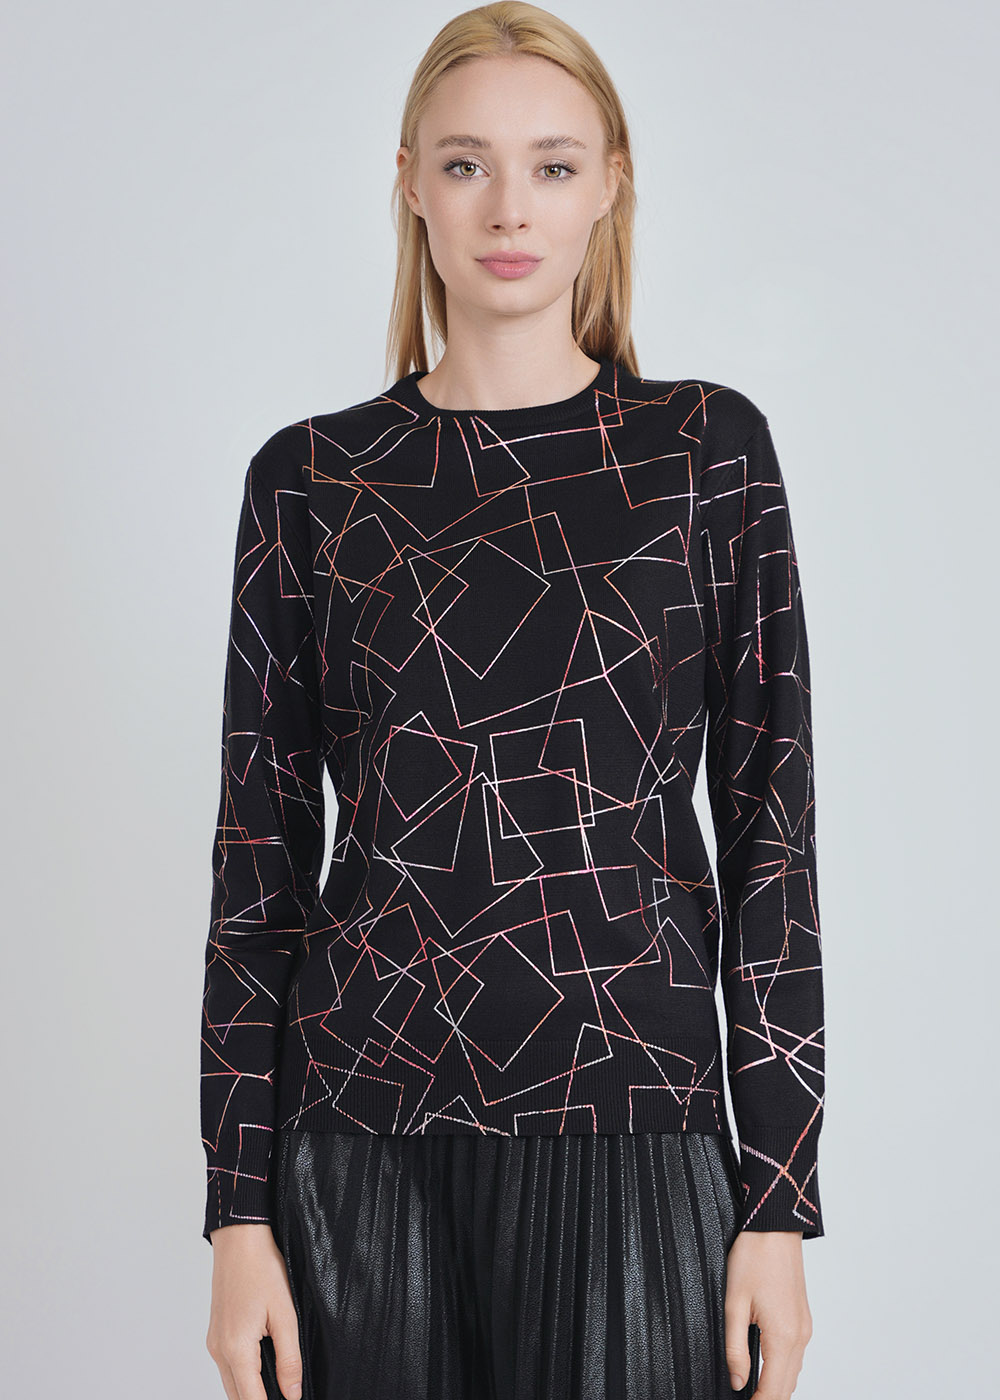 Knit Intrigue: Black Sweater with Geometric Panache